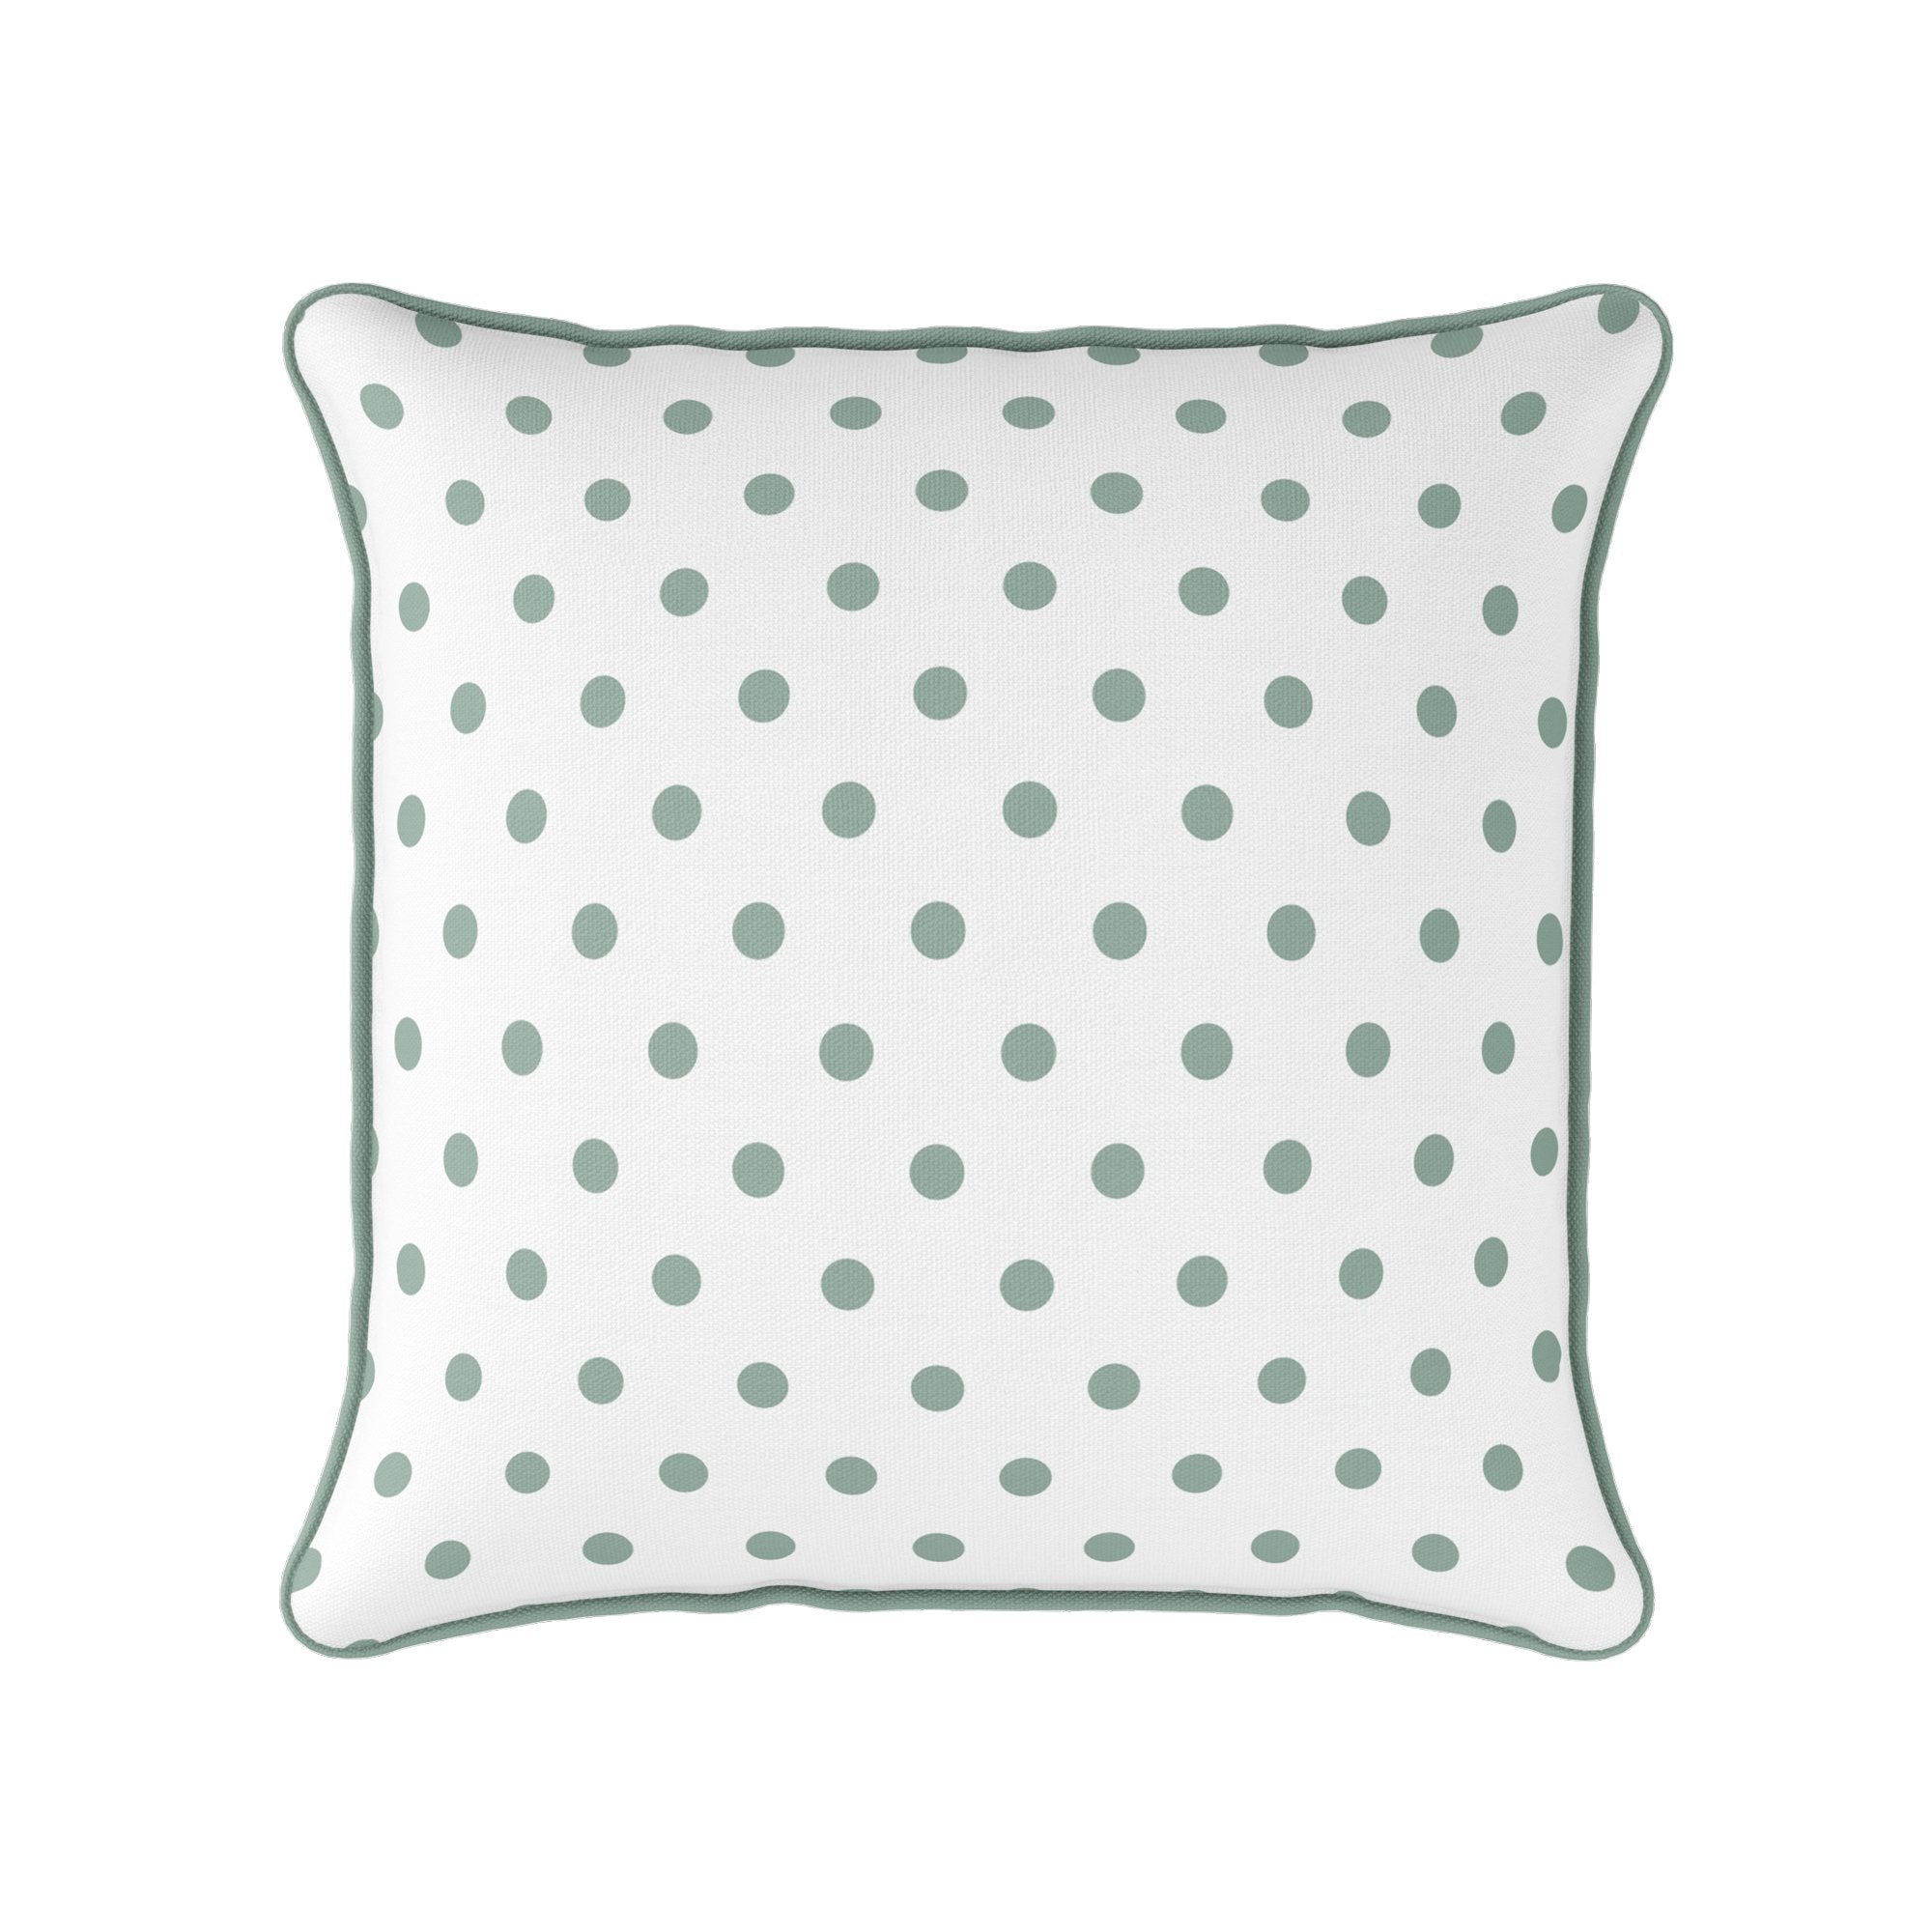 Spotty Day Cushion - Greens - Hydrangea Lane Home